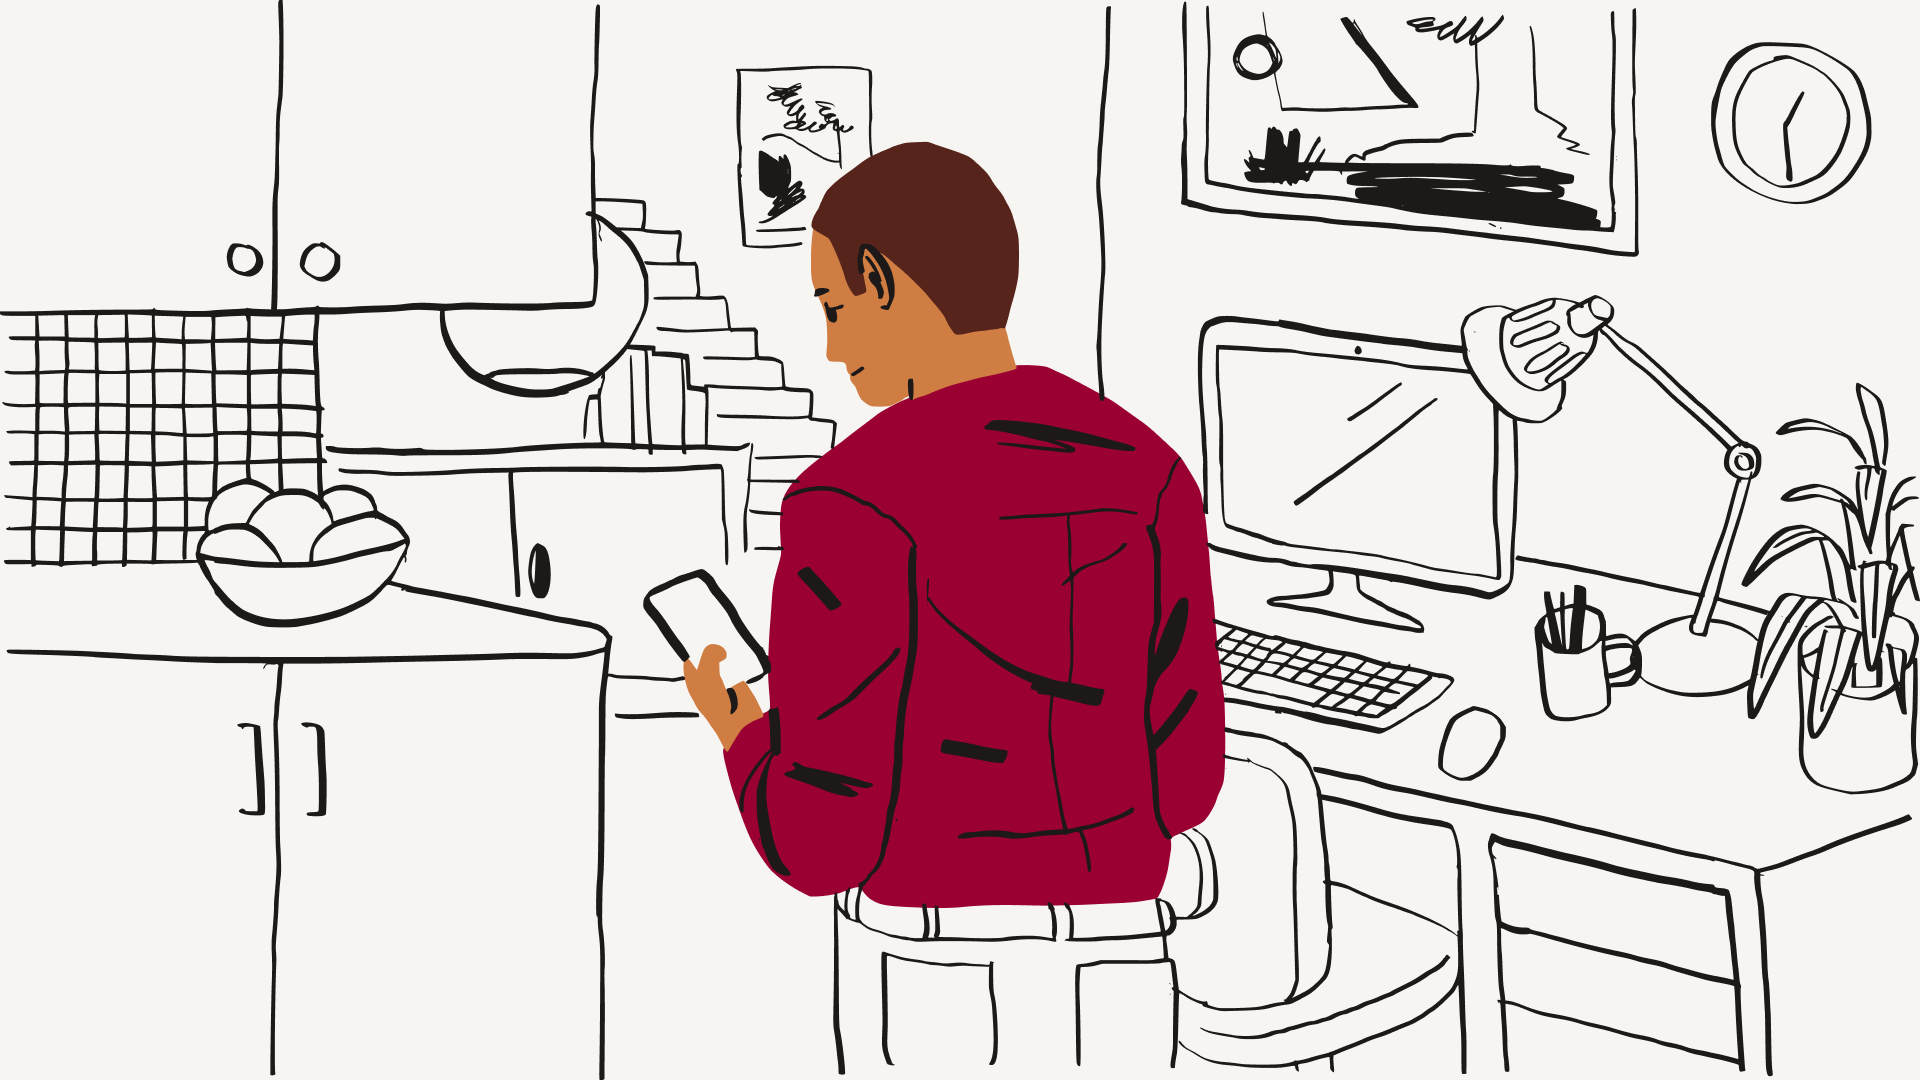 Ilustrasi seseorang yang memakai baju merah melihat telefon mudah alih di sebelah meja dengan monitor dan papan kekunci